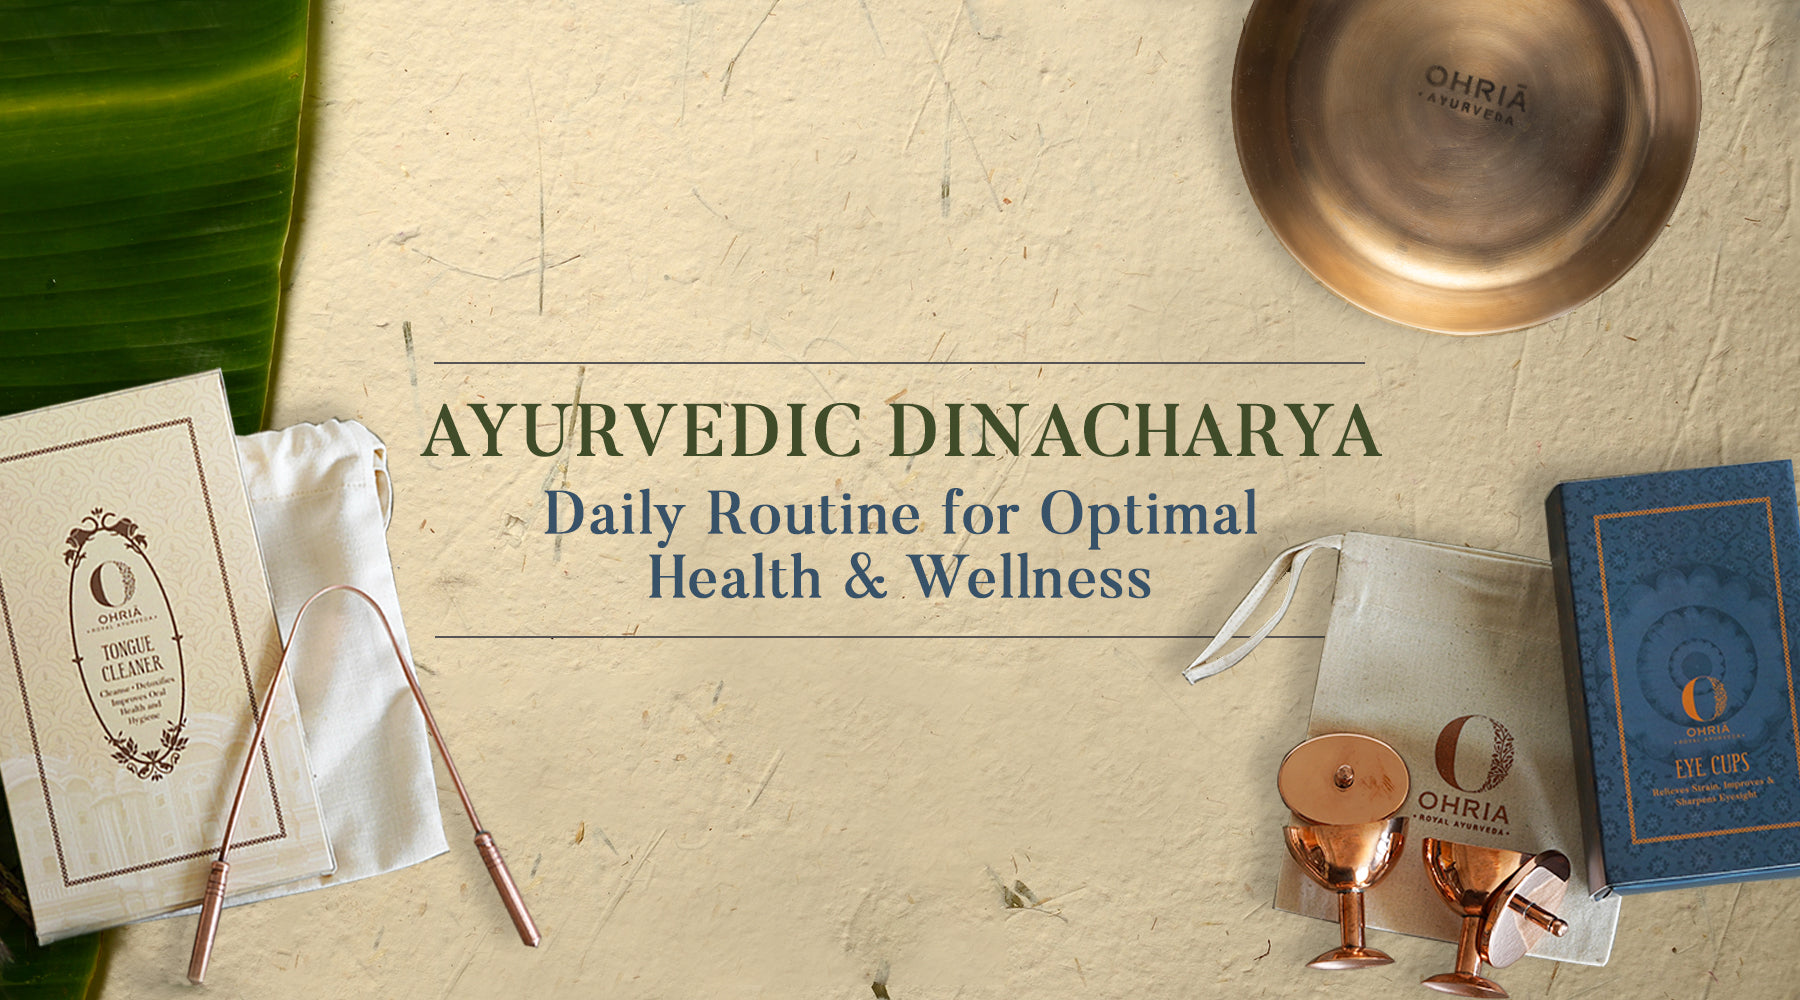 Ayurvedic Dinacharya: Daily Routine for Optimal Health - Ohria